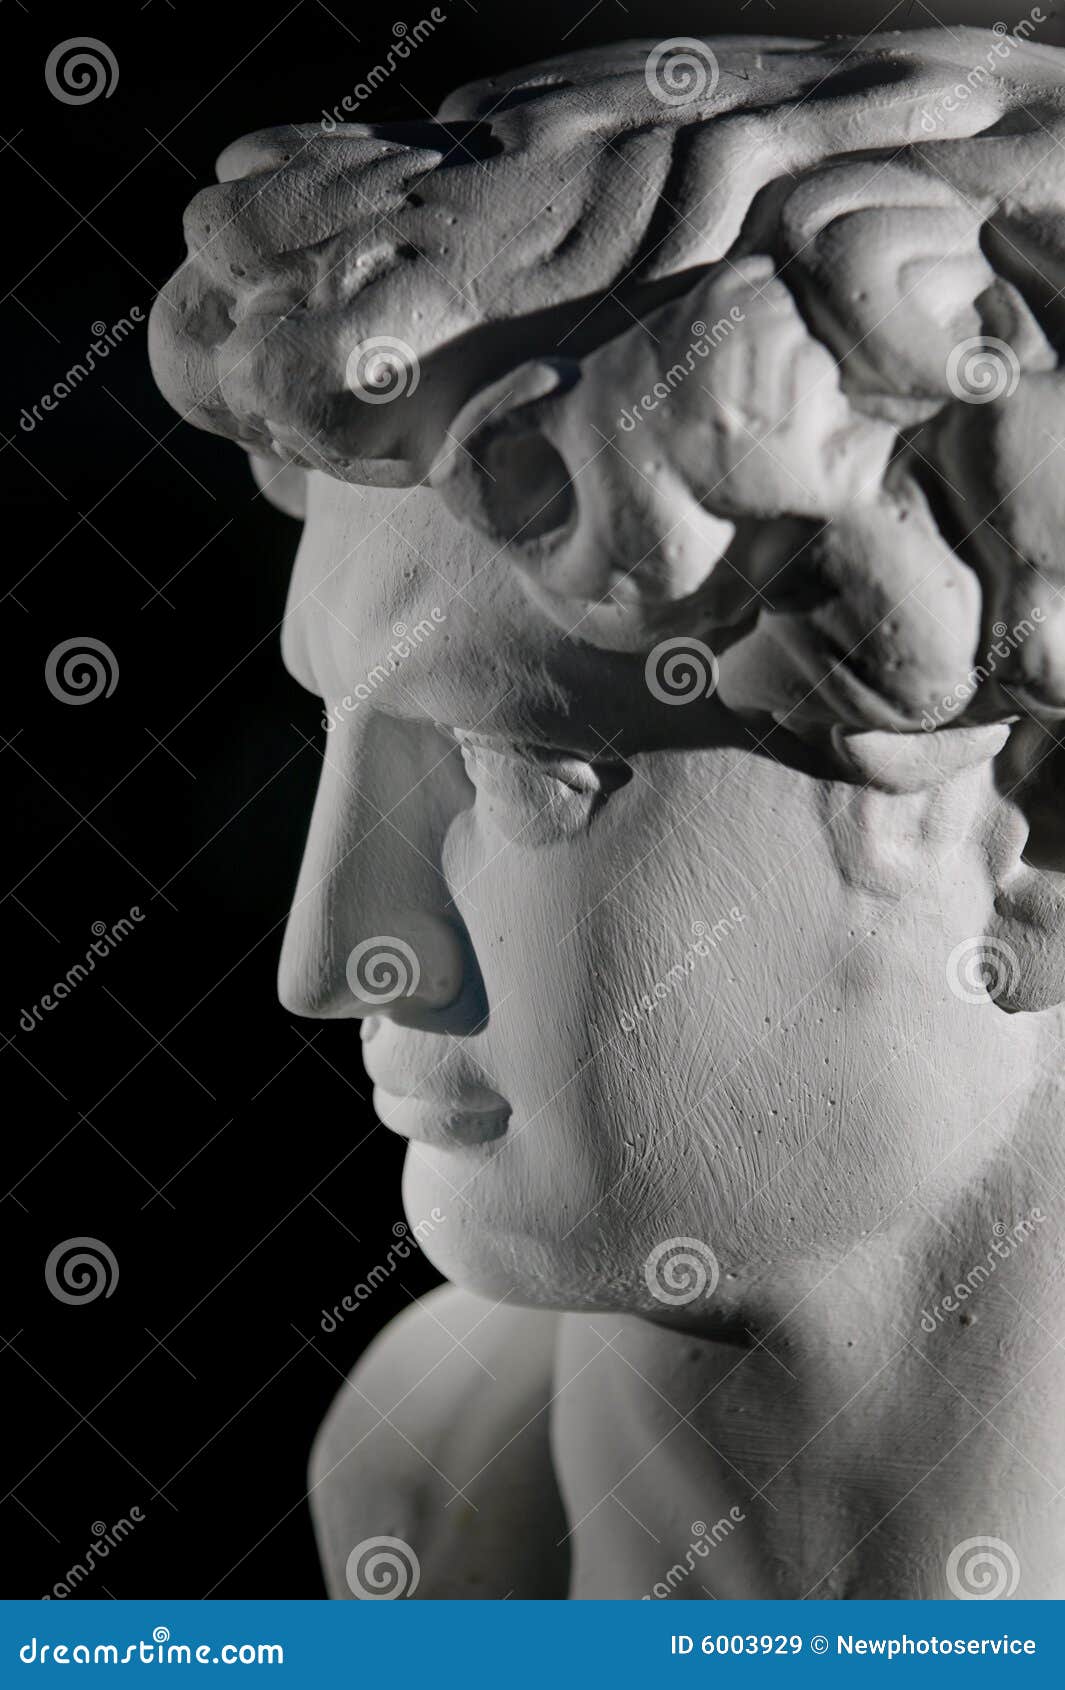 replica sculpture of david